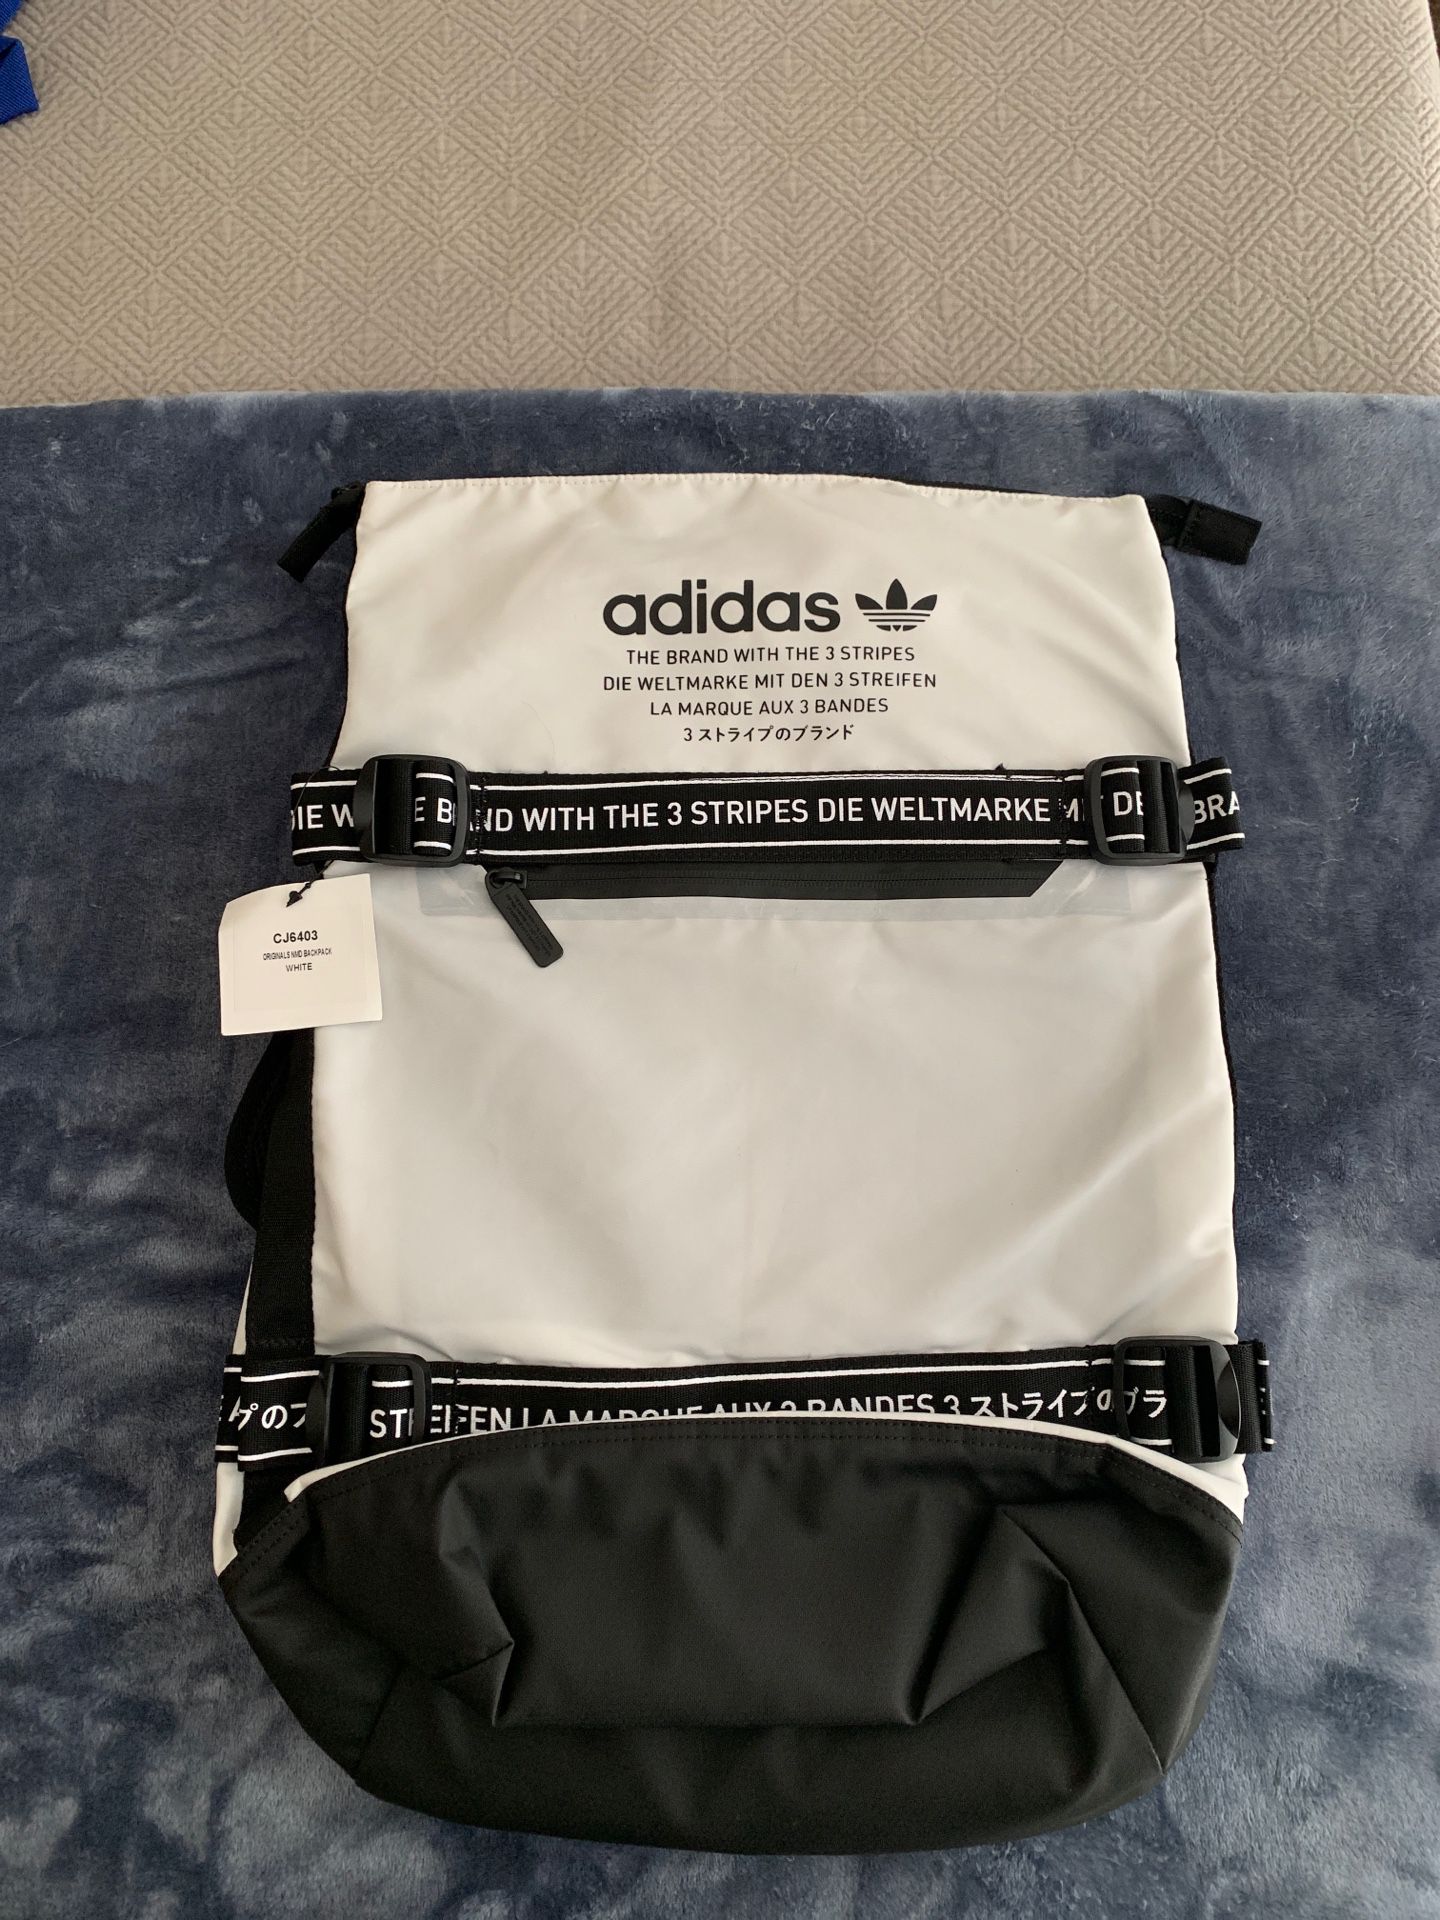 Adidas - Originals NMD Backpack (Brand New!)